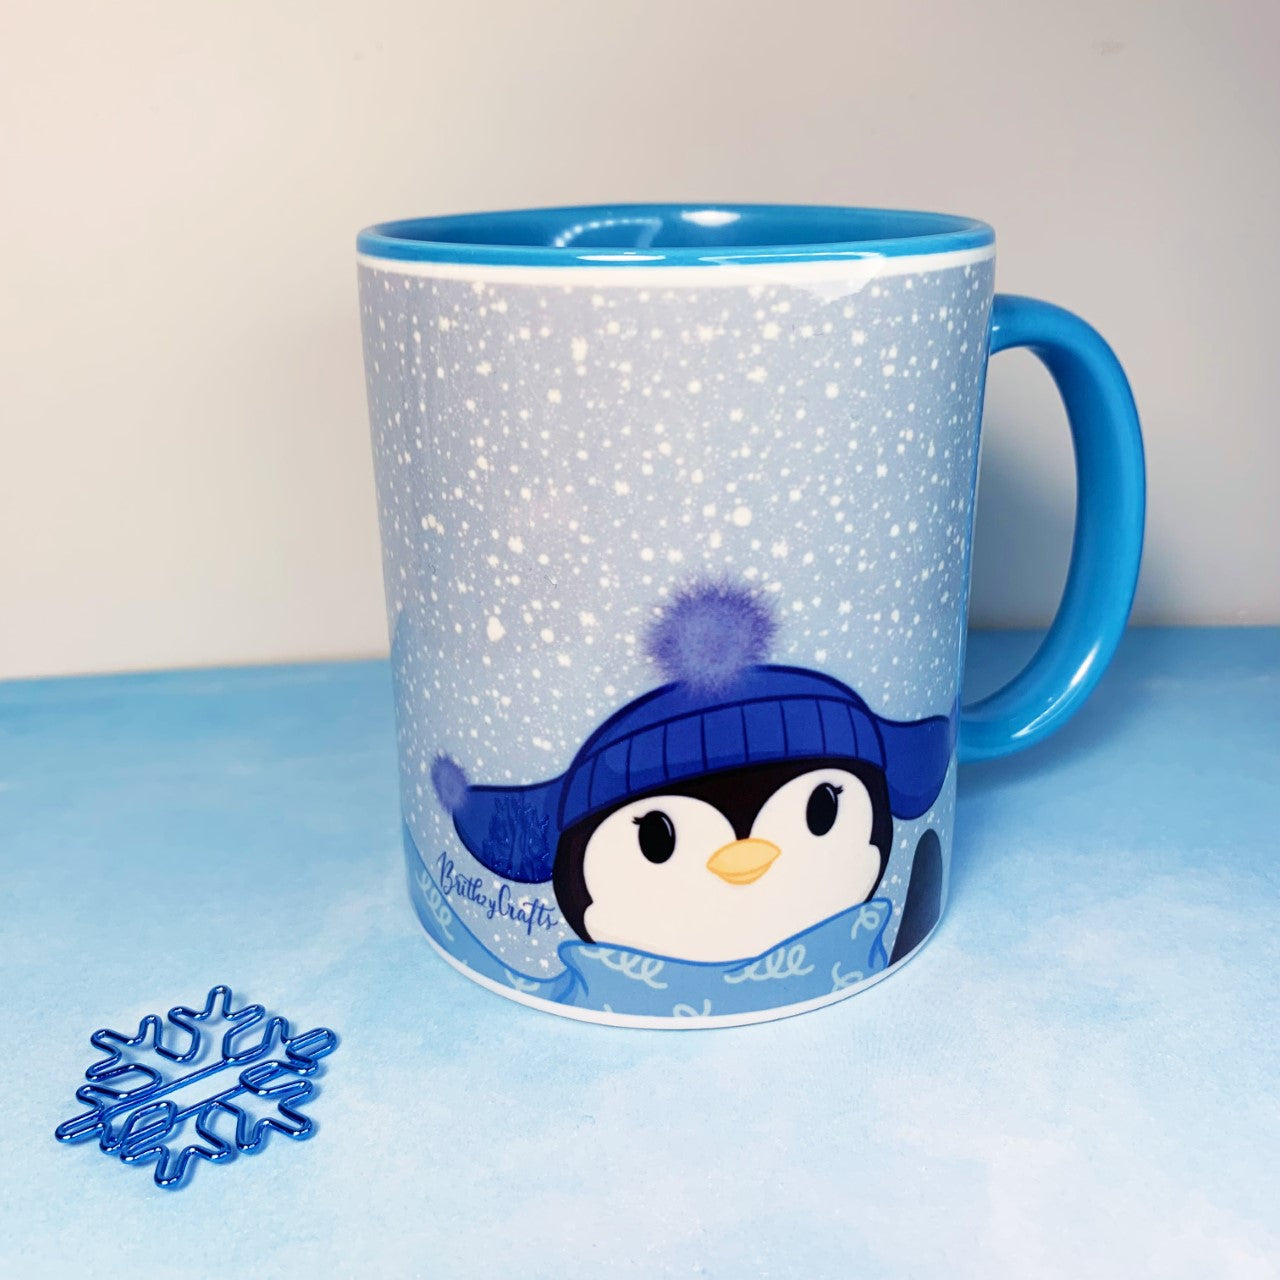 Winter penguin - Let it snow! - 350ml Mug